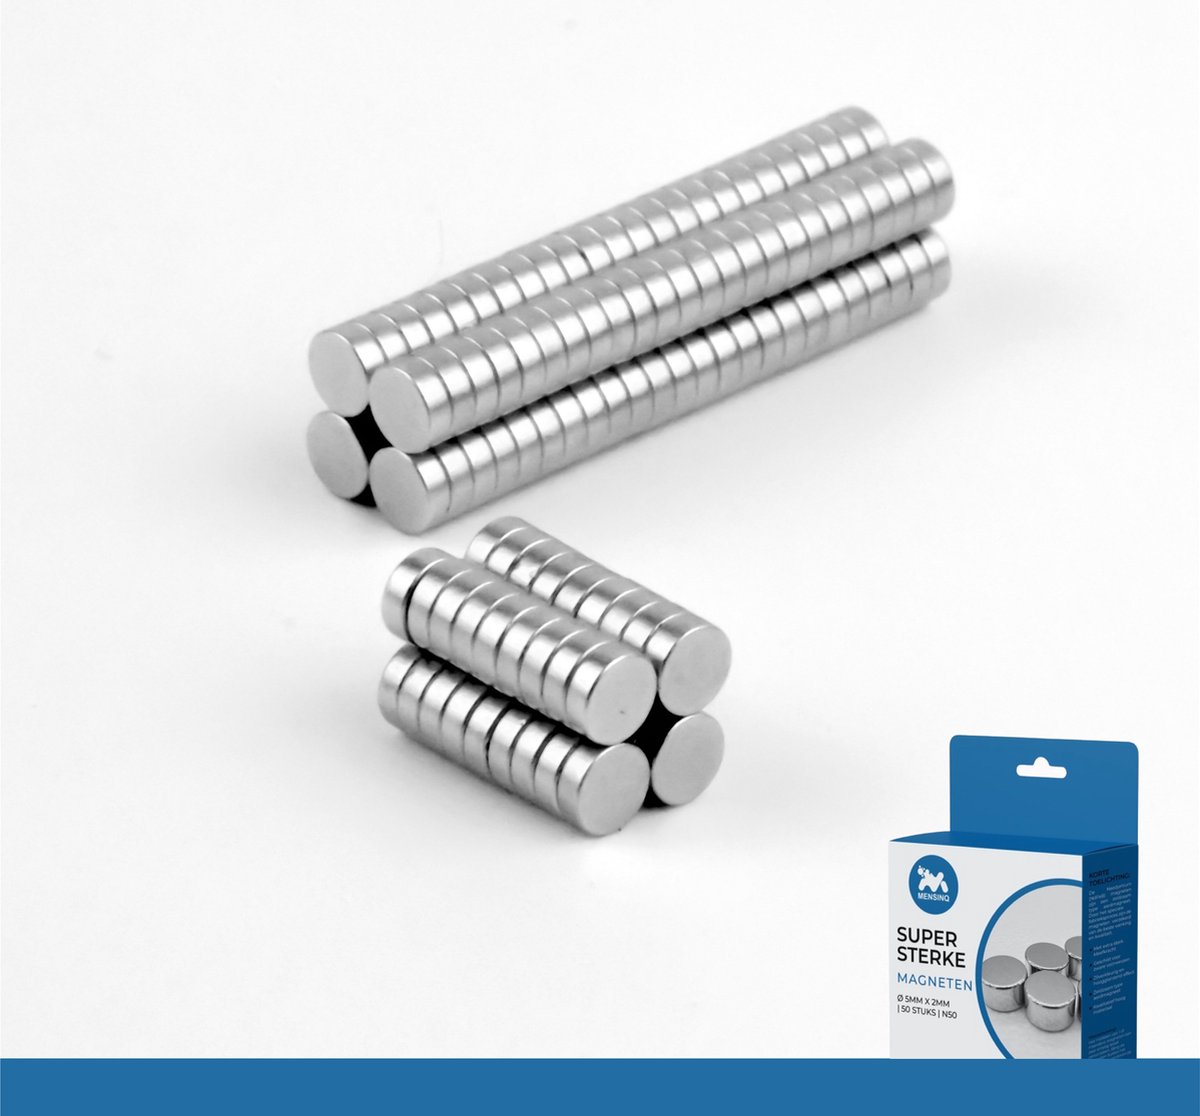 MENSINQ® Magneten – Magneet – Magneetjes – Magneten Sterk – 5x2mm - N50 - 500 stuks